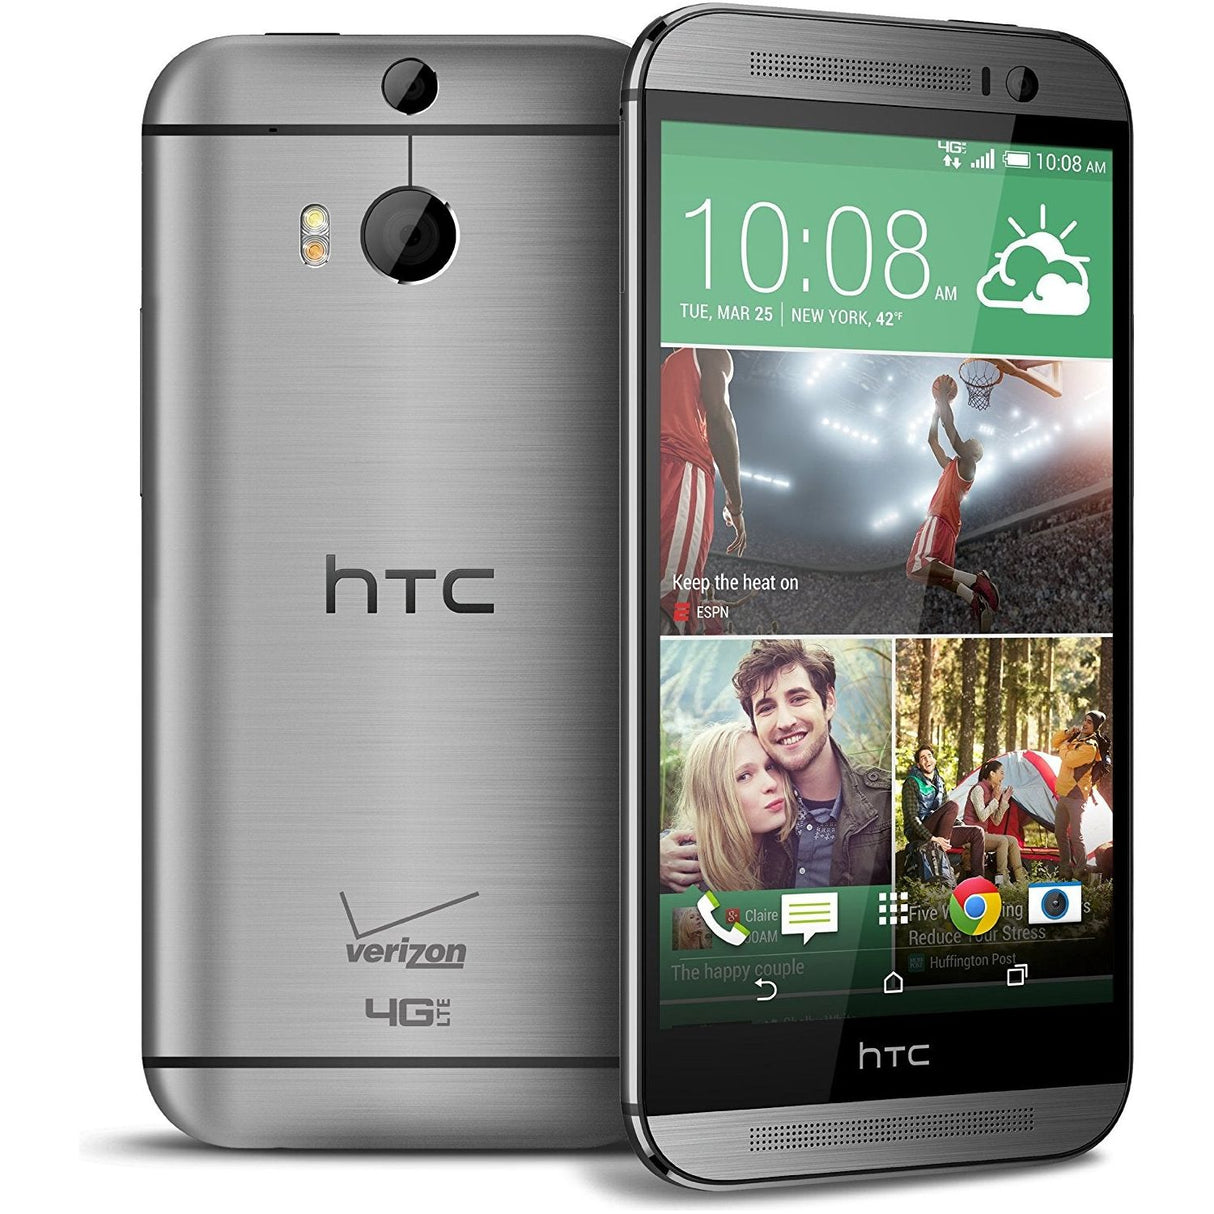 HTC One M8 - 32 GB - Gunmetal Gray - Verizon - CDMA/GSM